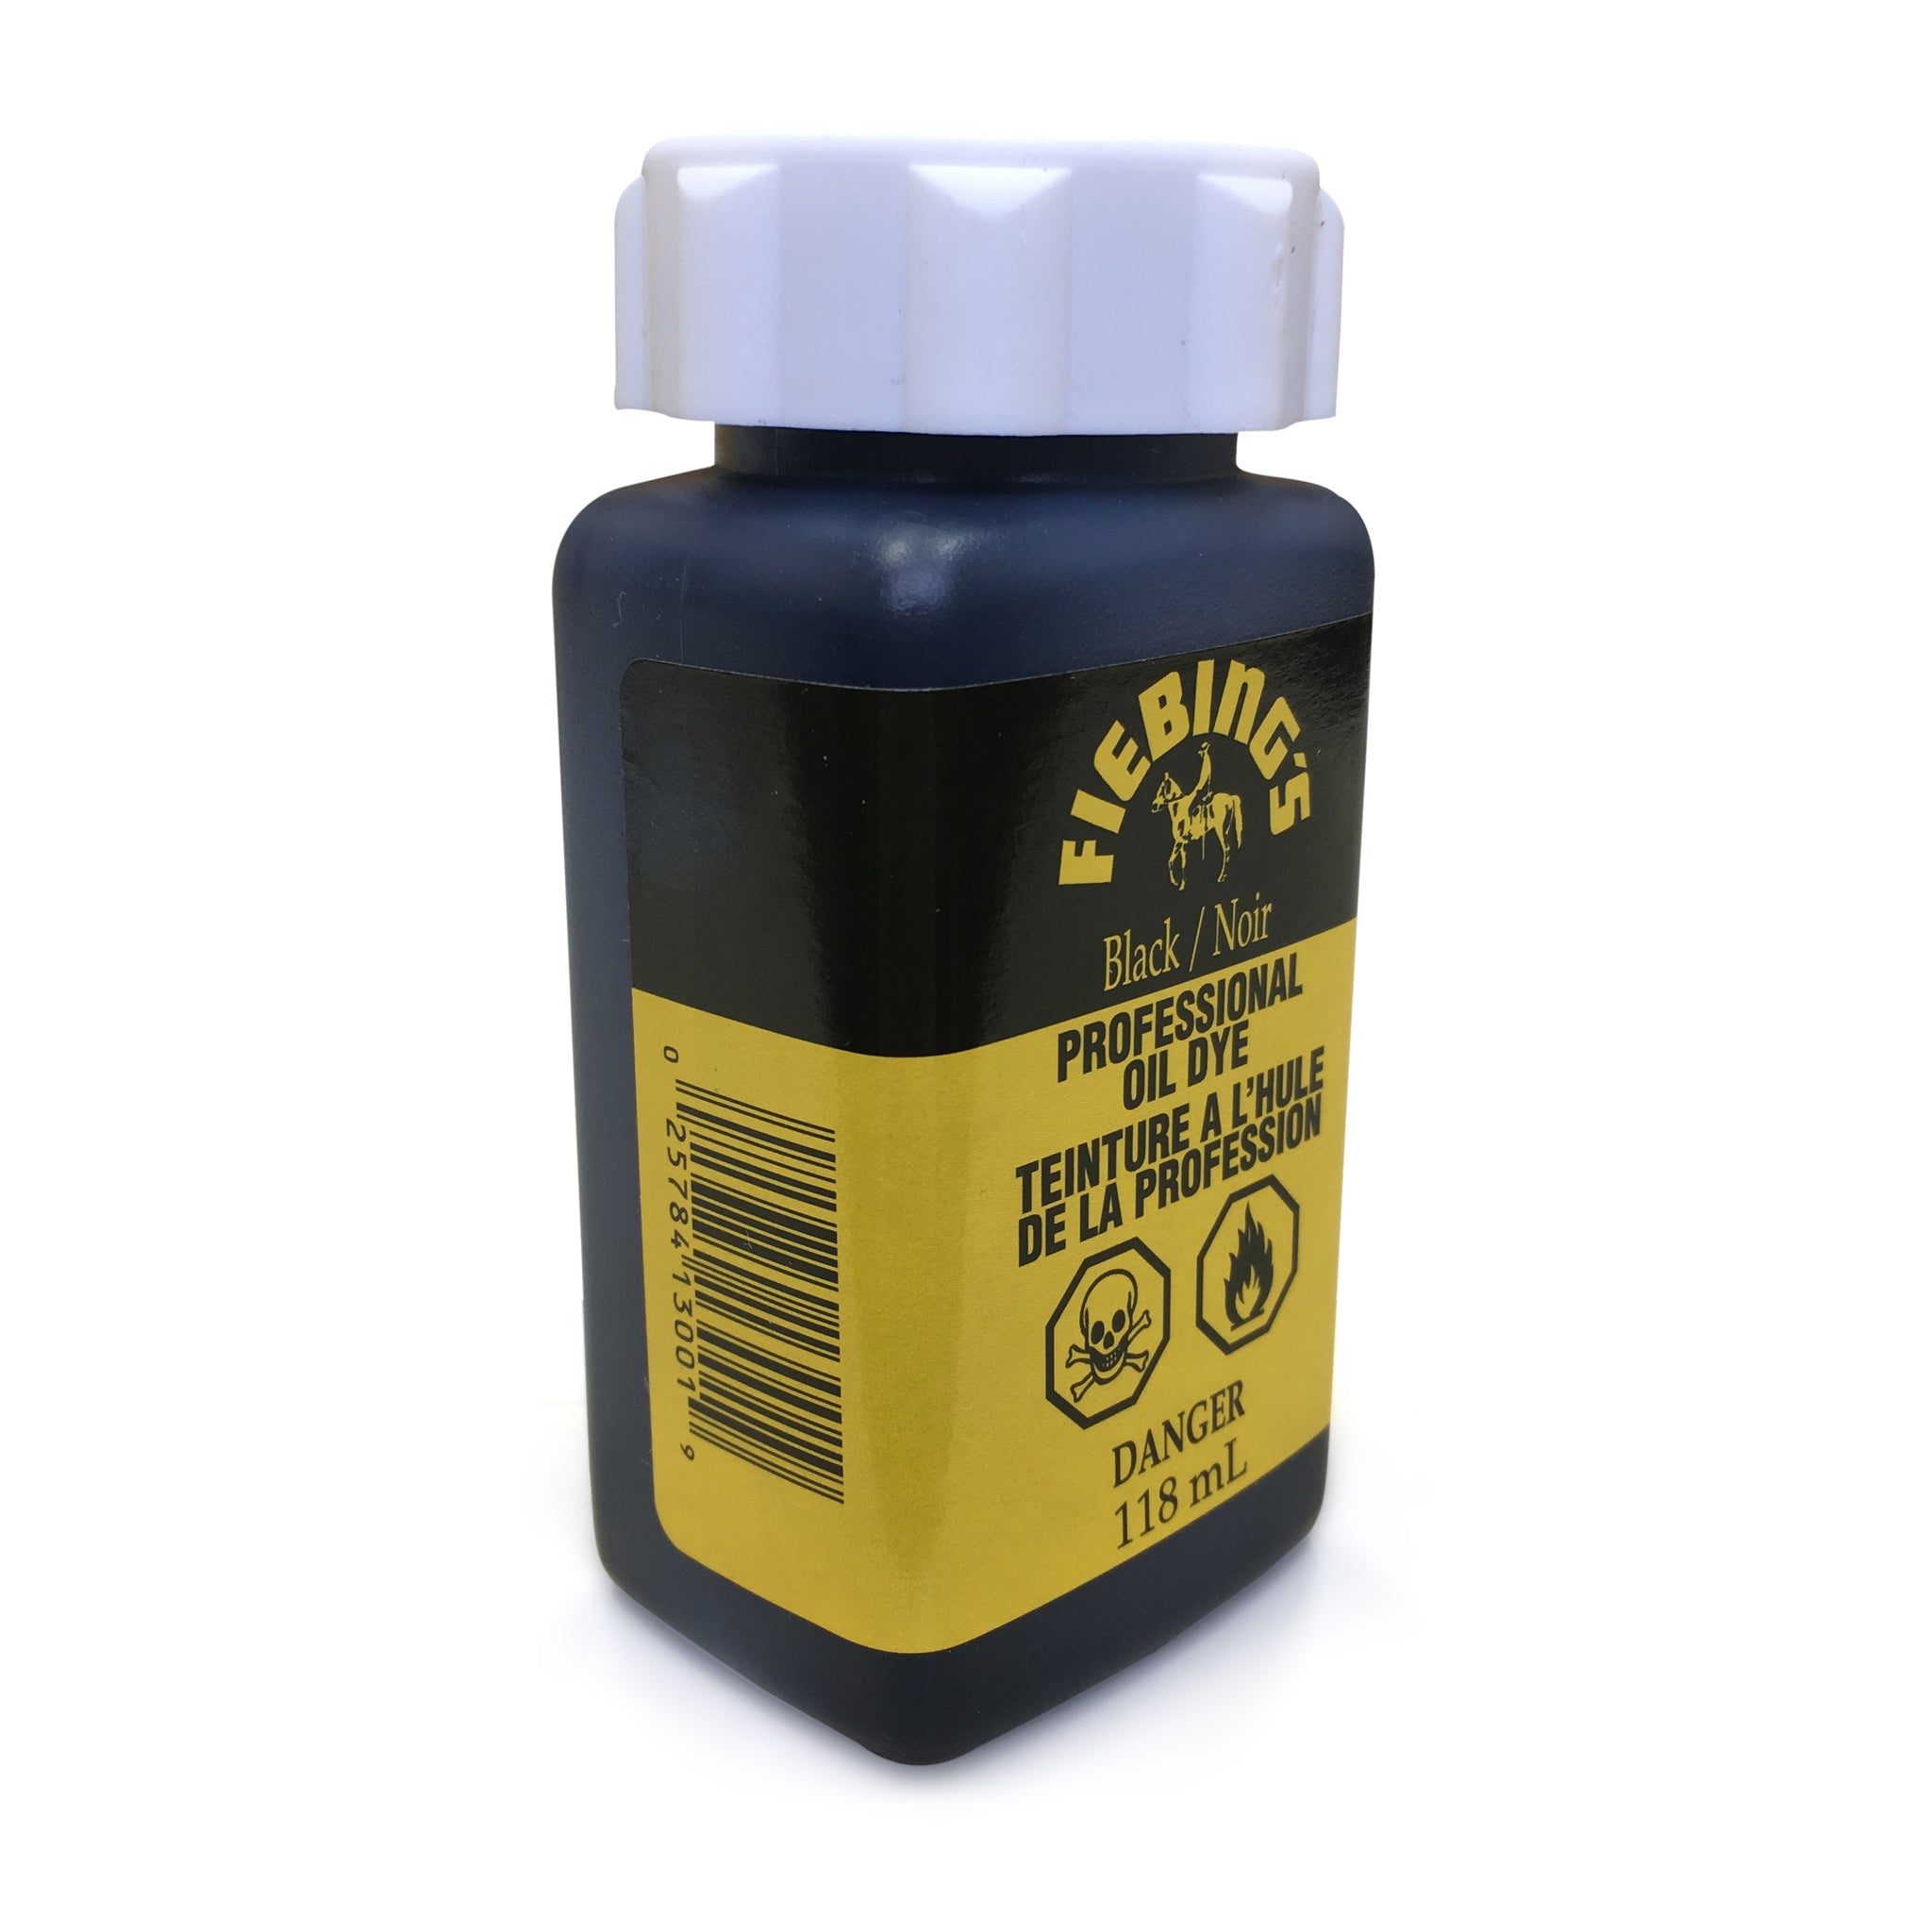 Fiebing's Pro Dye - Oil Based Leather Dye - 118ml Bottle For All Leather  Sufaces